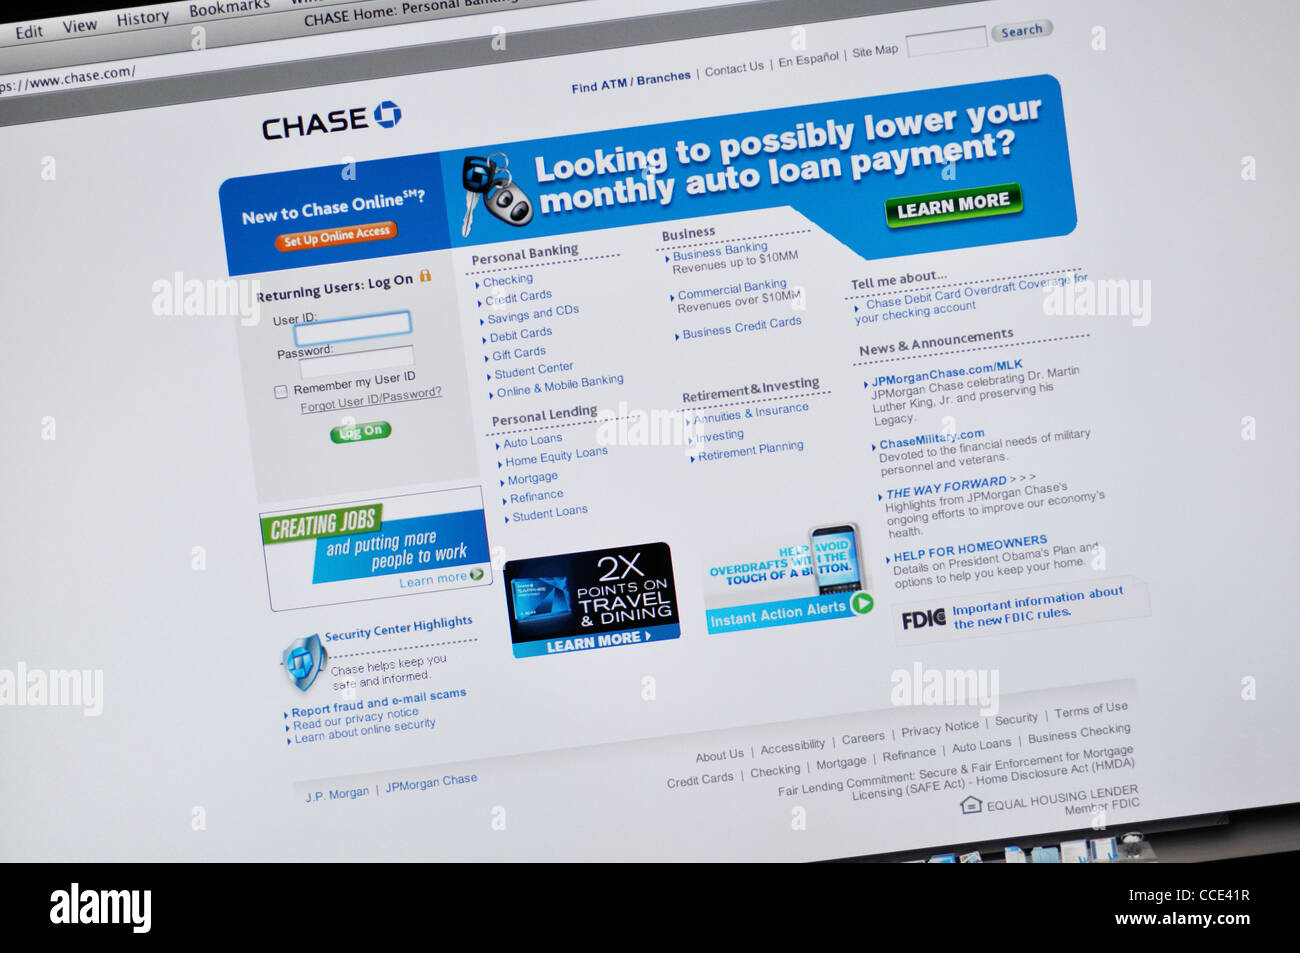 Chase Bank Auto Loans / Chase Open Savings Account Bonus